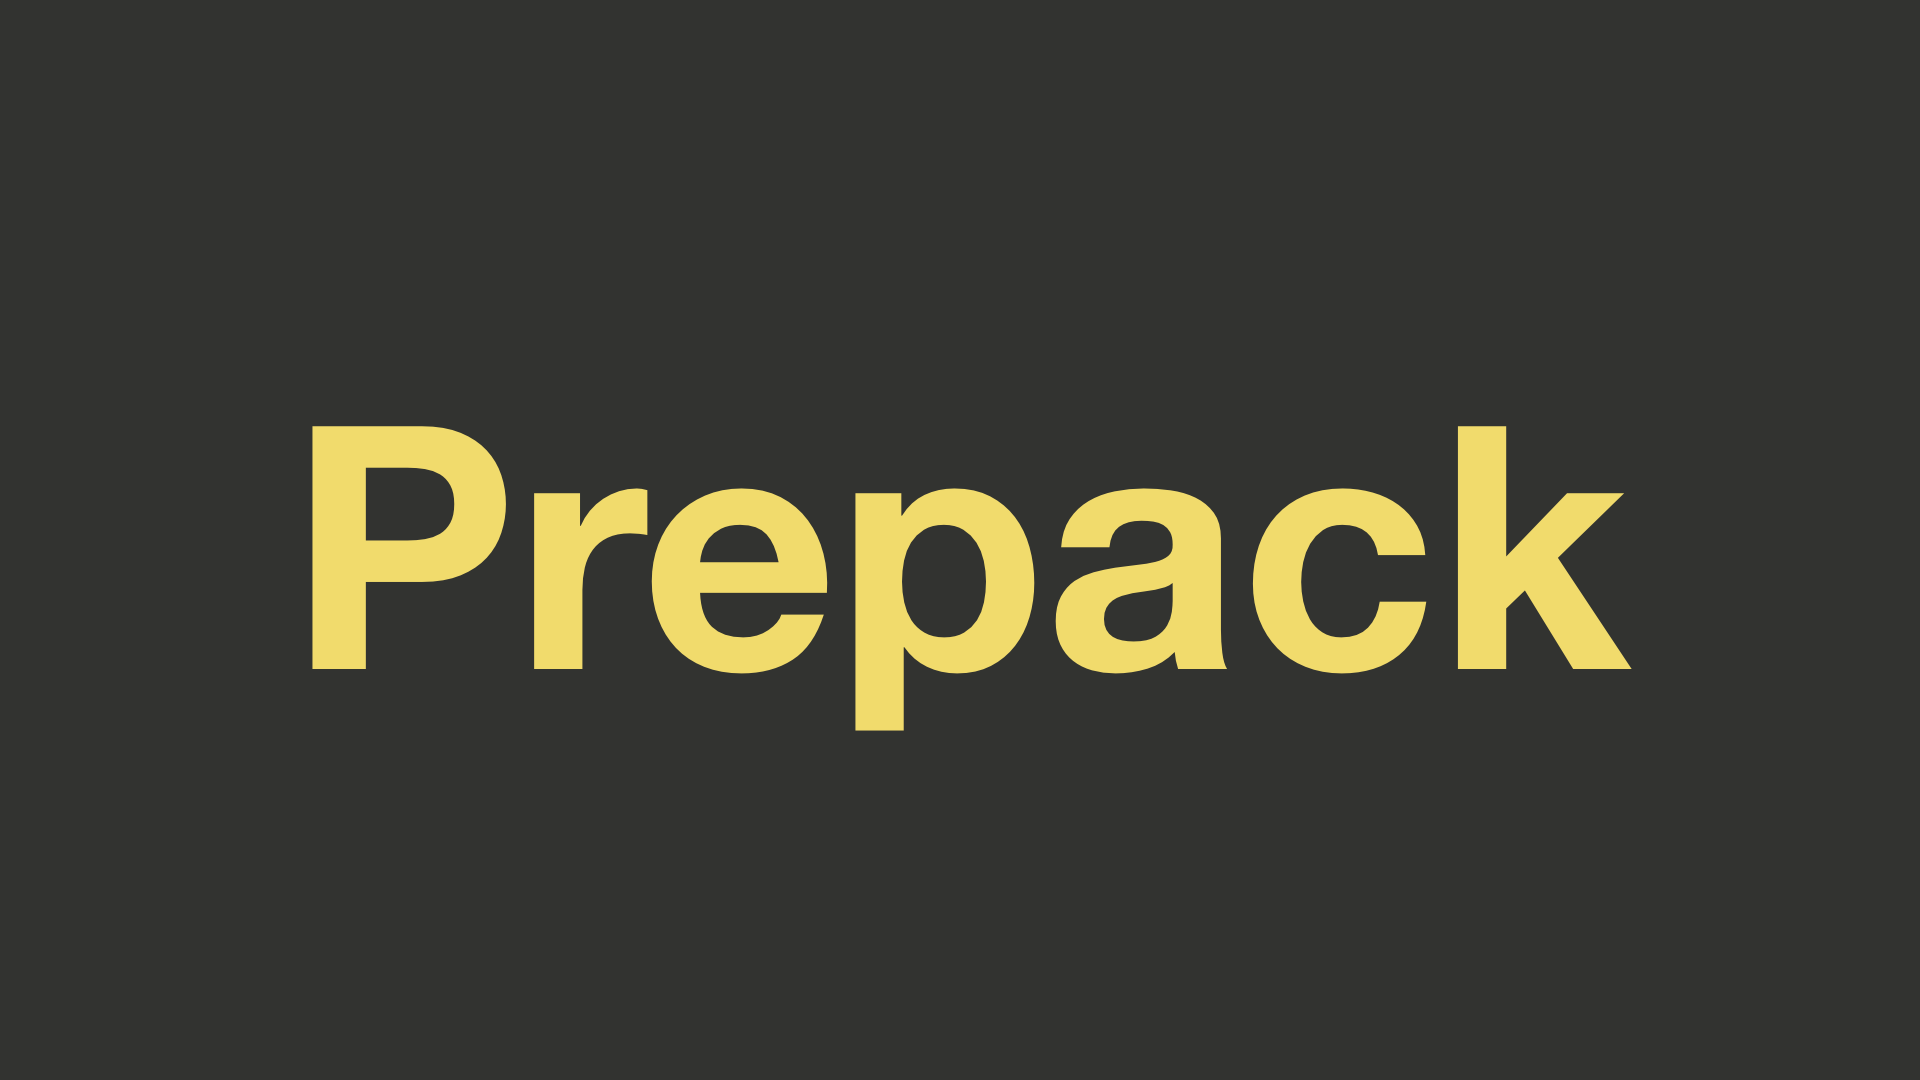 Prepack logo